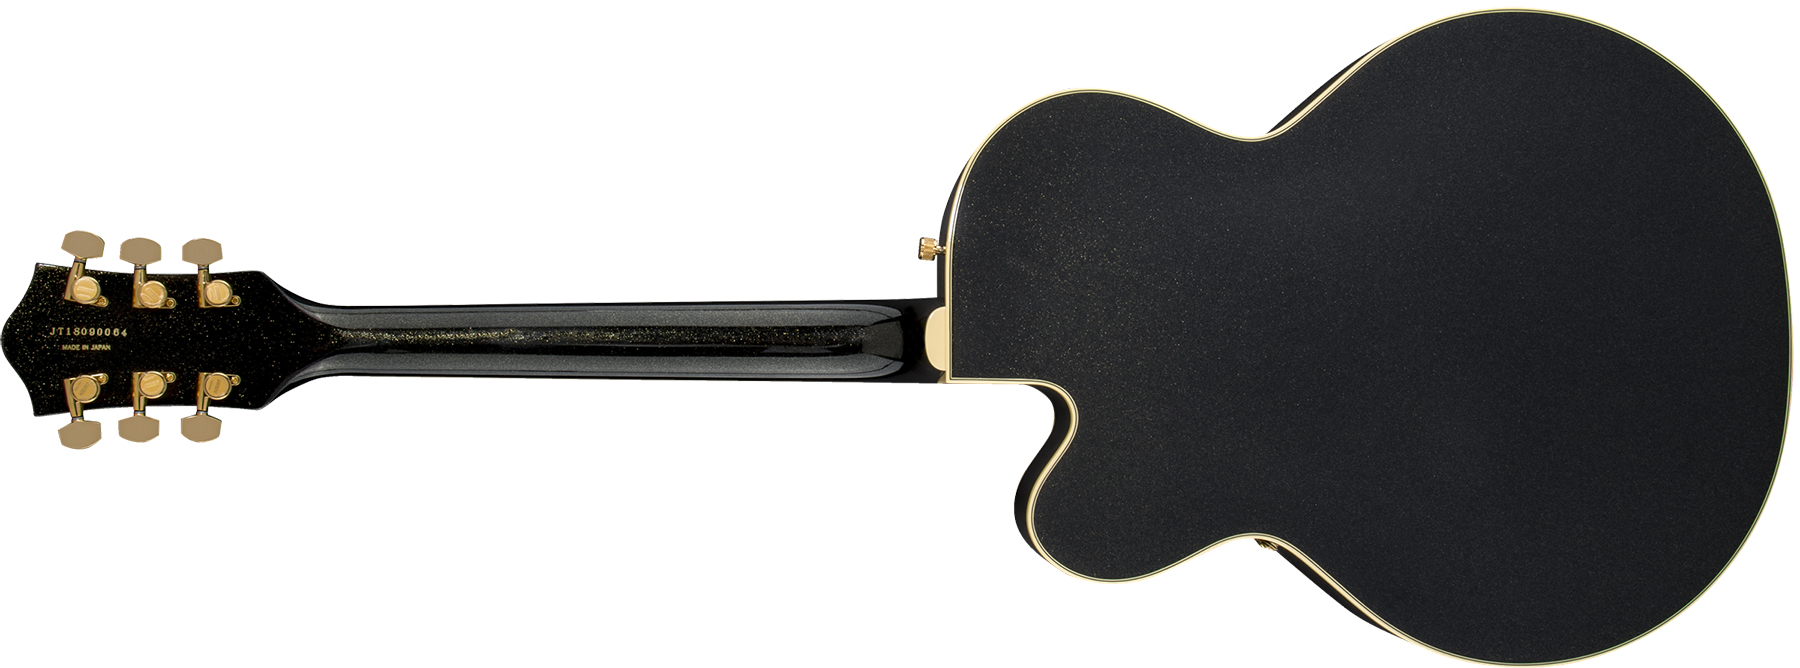 Gretsch Steve Wariner G6120t-sw Nashville Japon Signature Hh Bigsby Eb - Magic Black - Semi-Hollow E-Gitarre - Variation 1